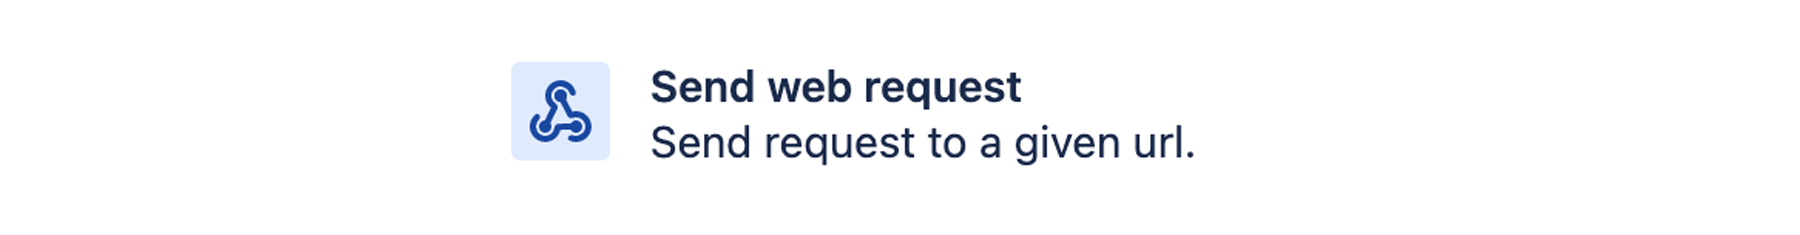 Enviar solicitud web